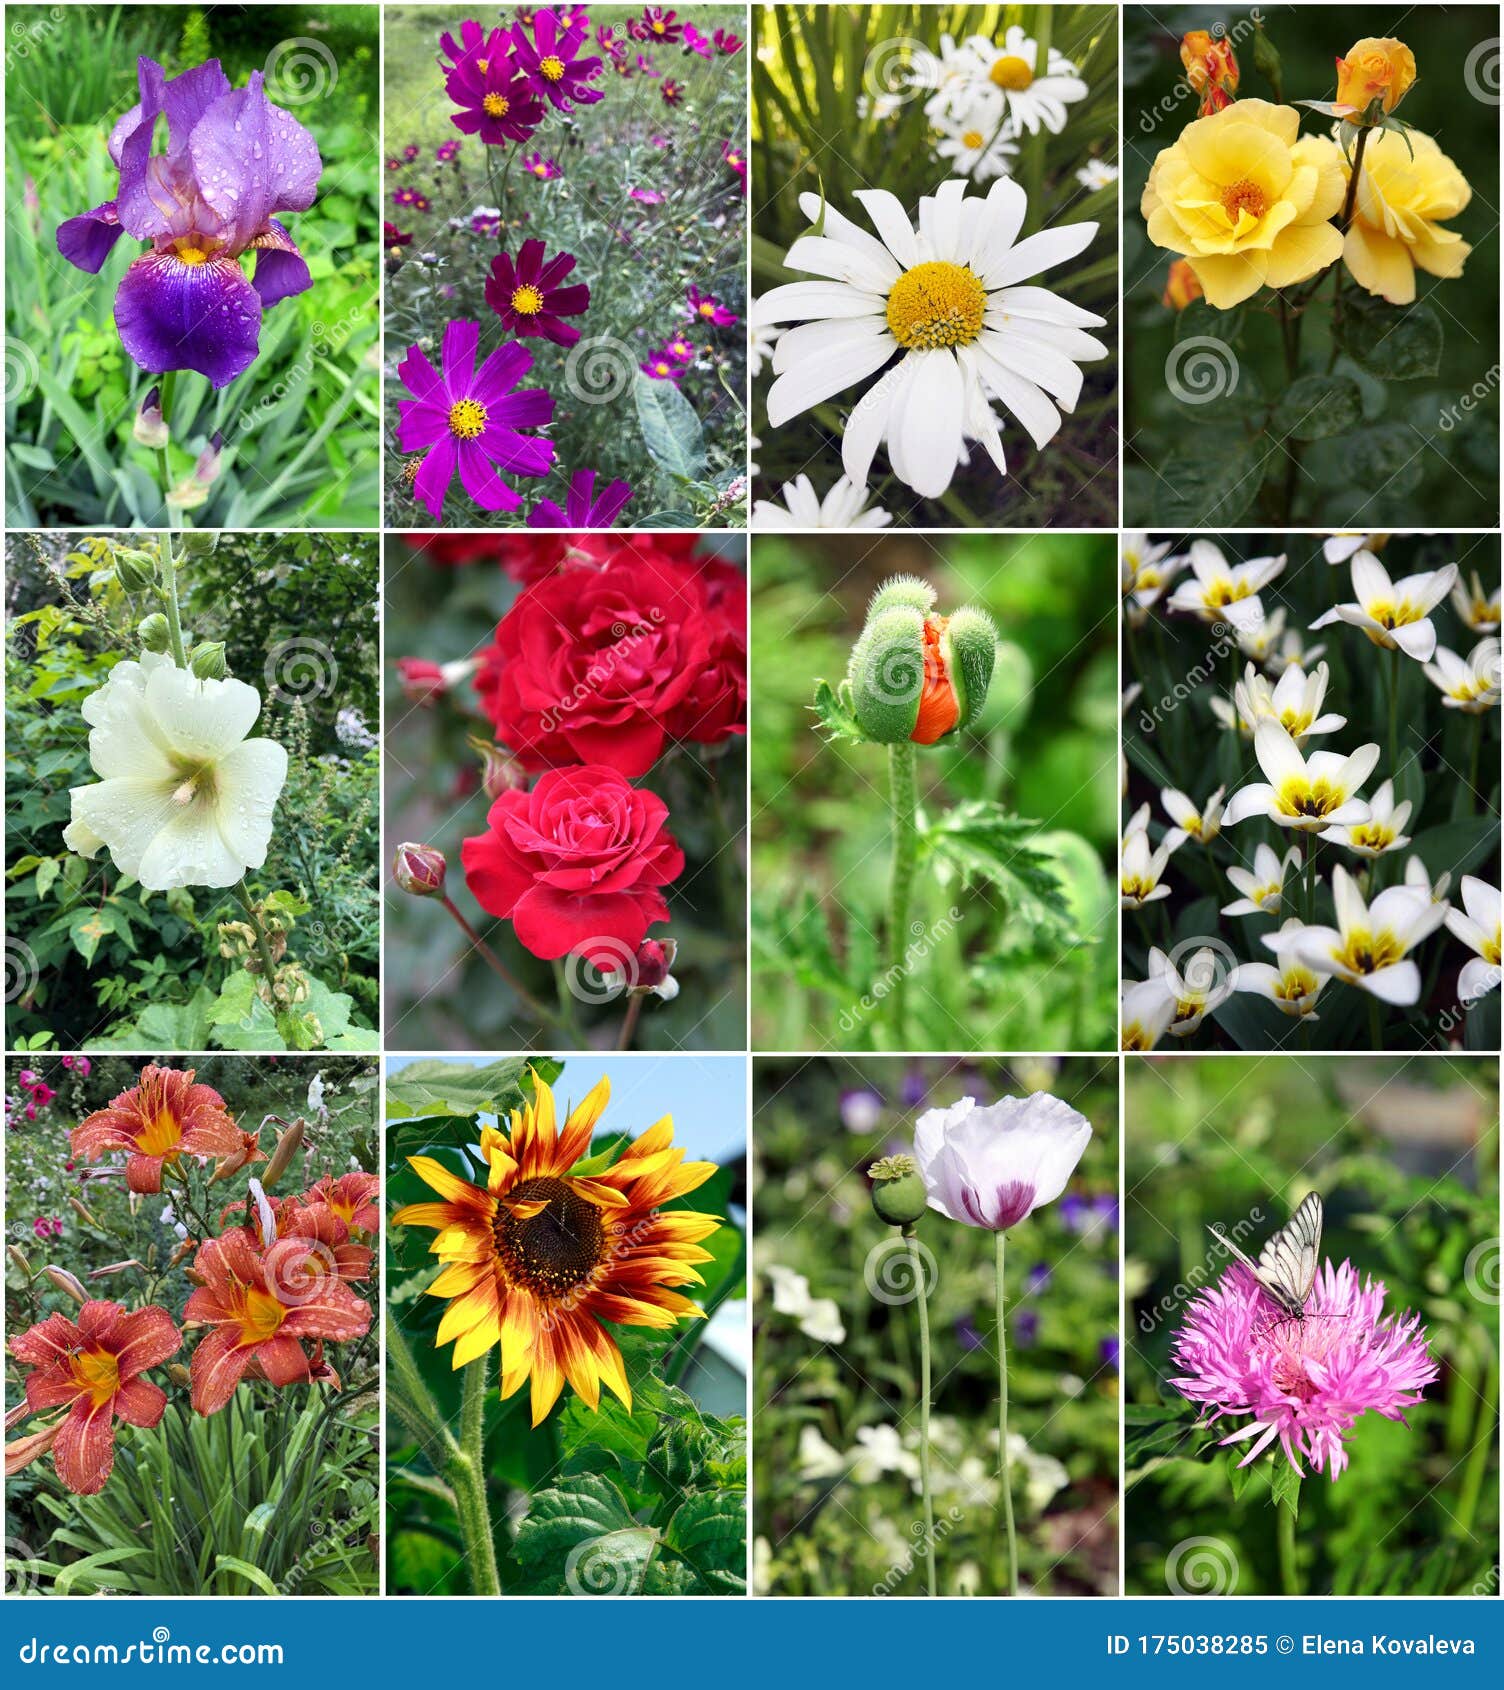 Ð¡ollage of Beautiful Flowers Stock Image - Image of iris, sunlight ...